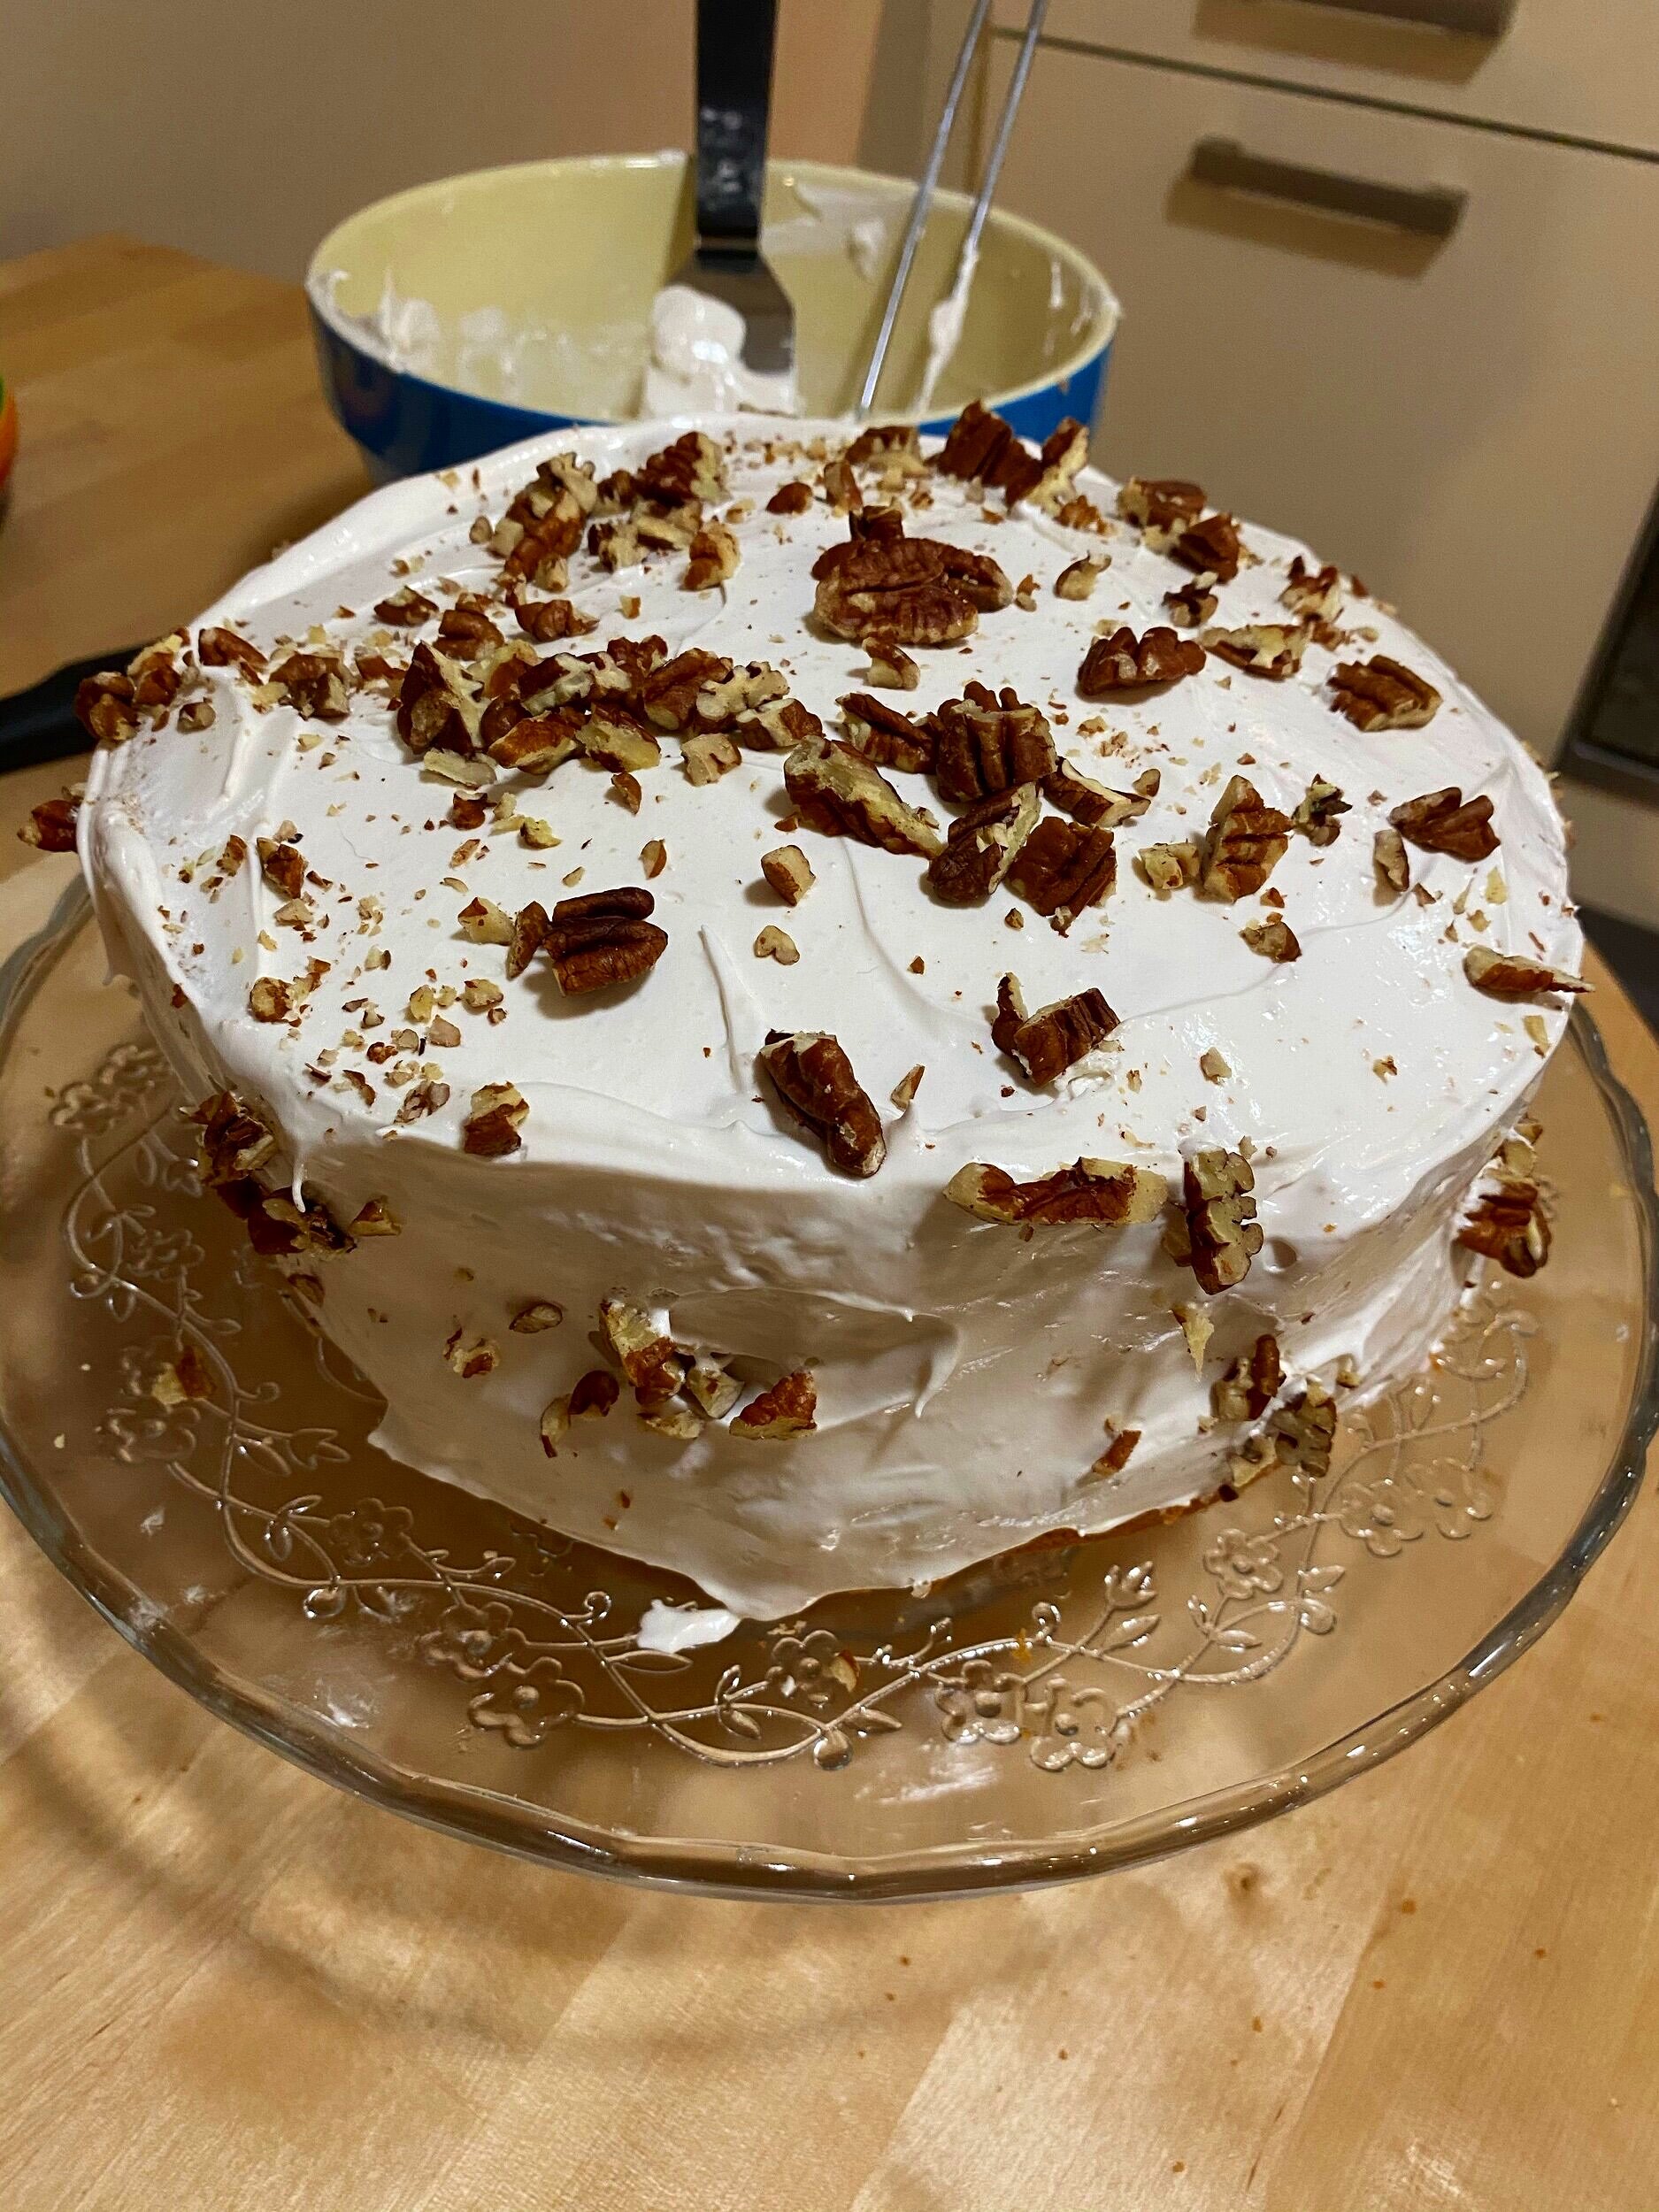 Week 14: Nigella Lawson’s Maple Cake with Meringue Frosting